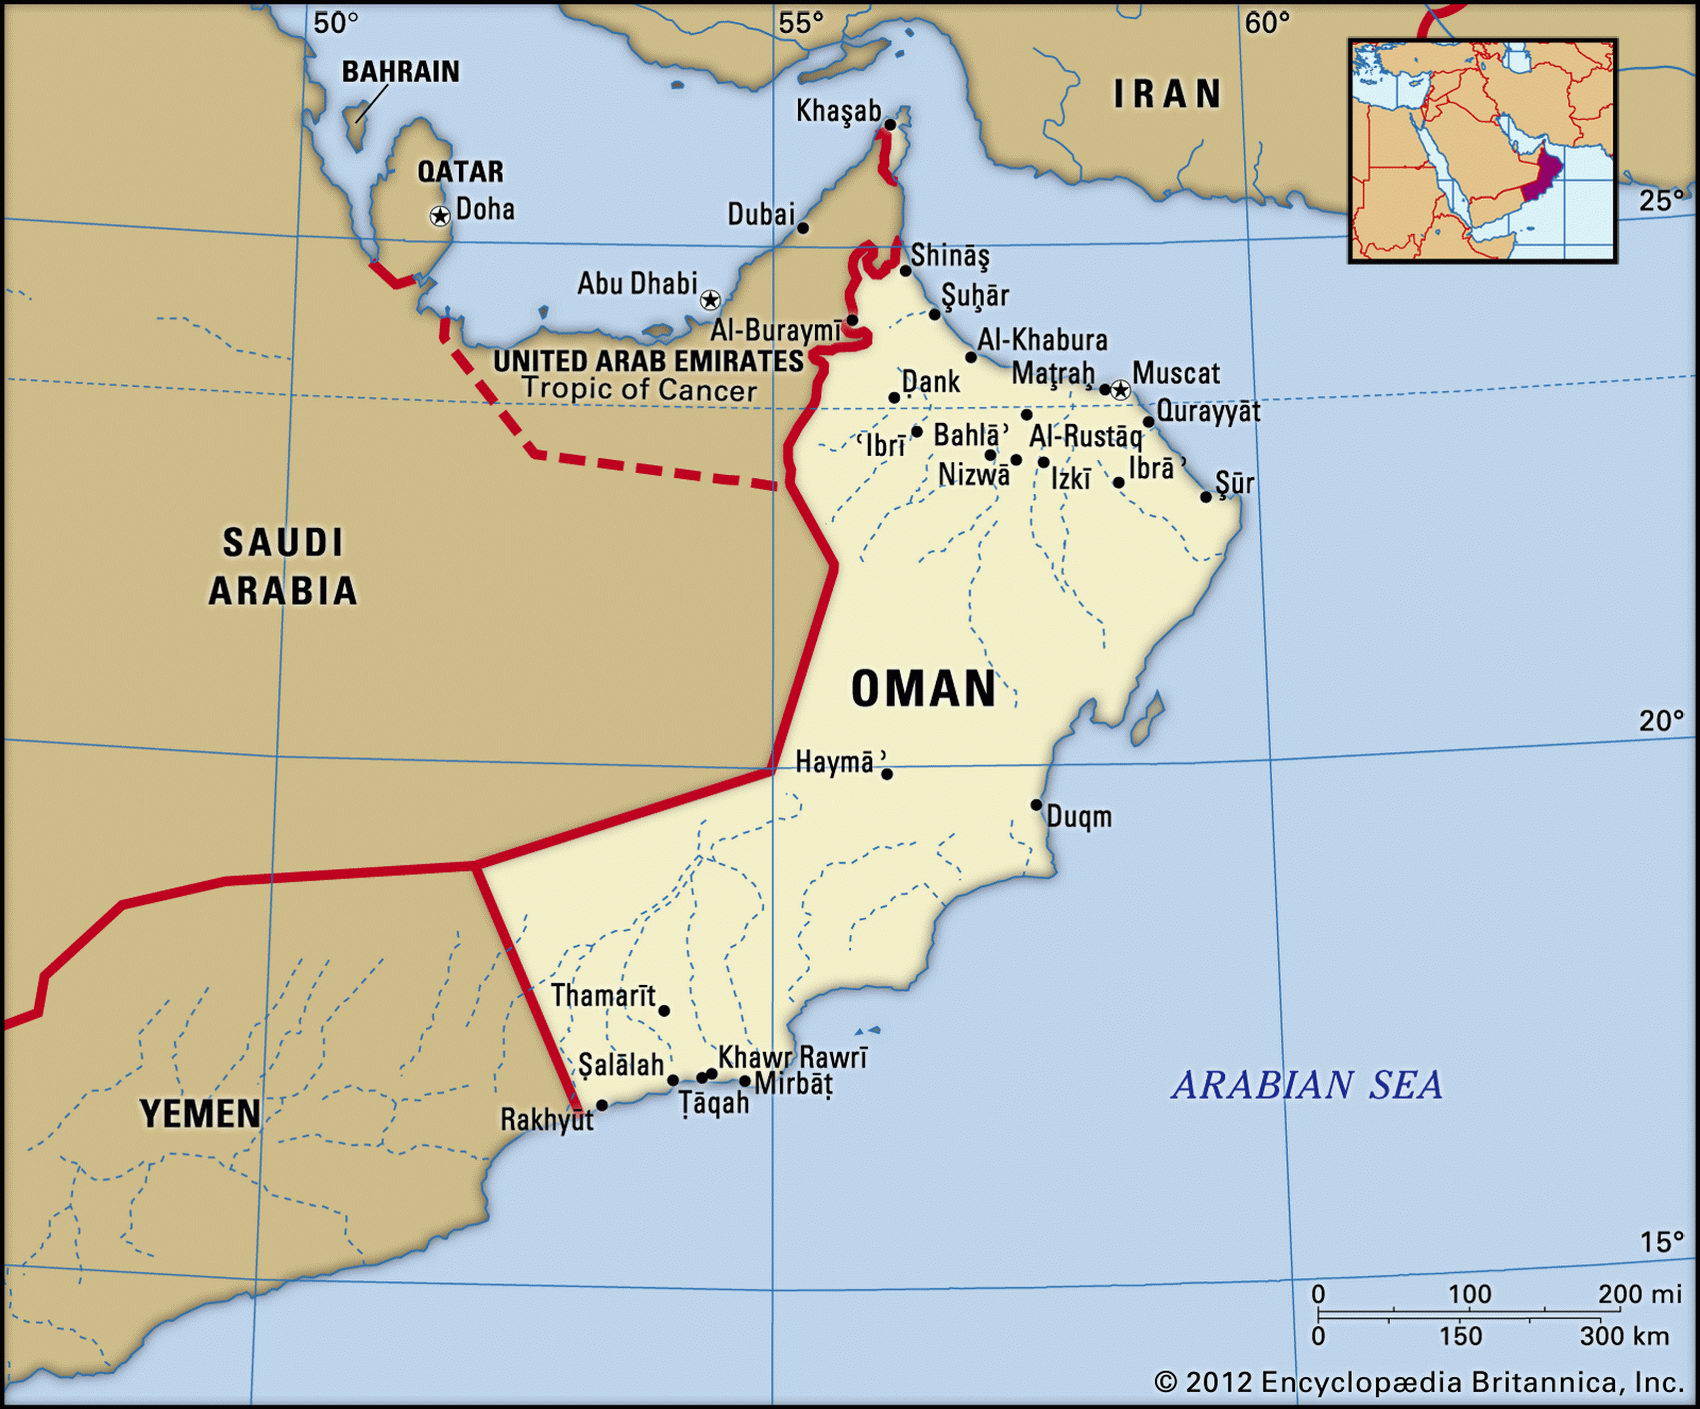 https://map-rus.com/atlas/images/Oman.jpg